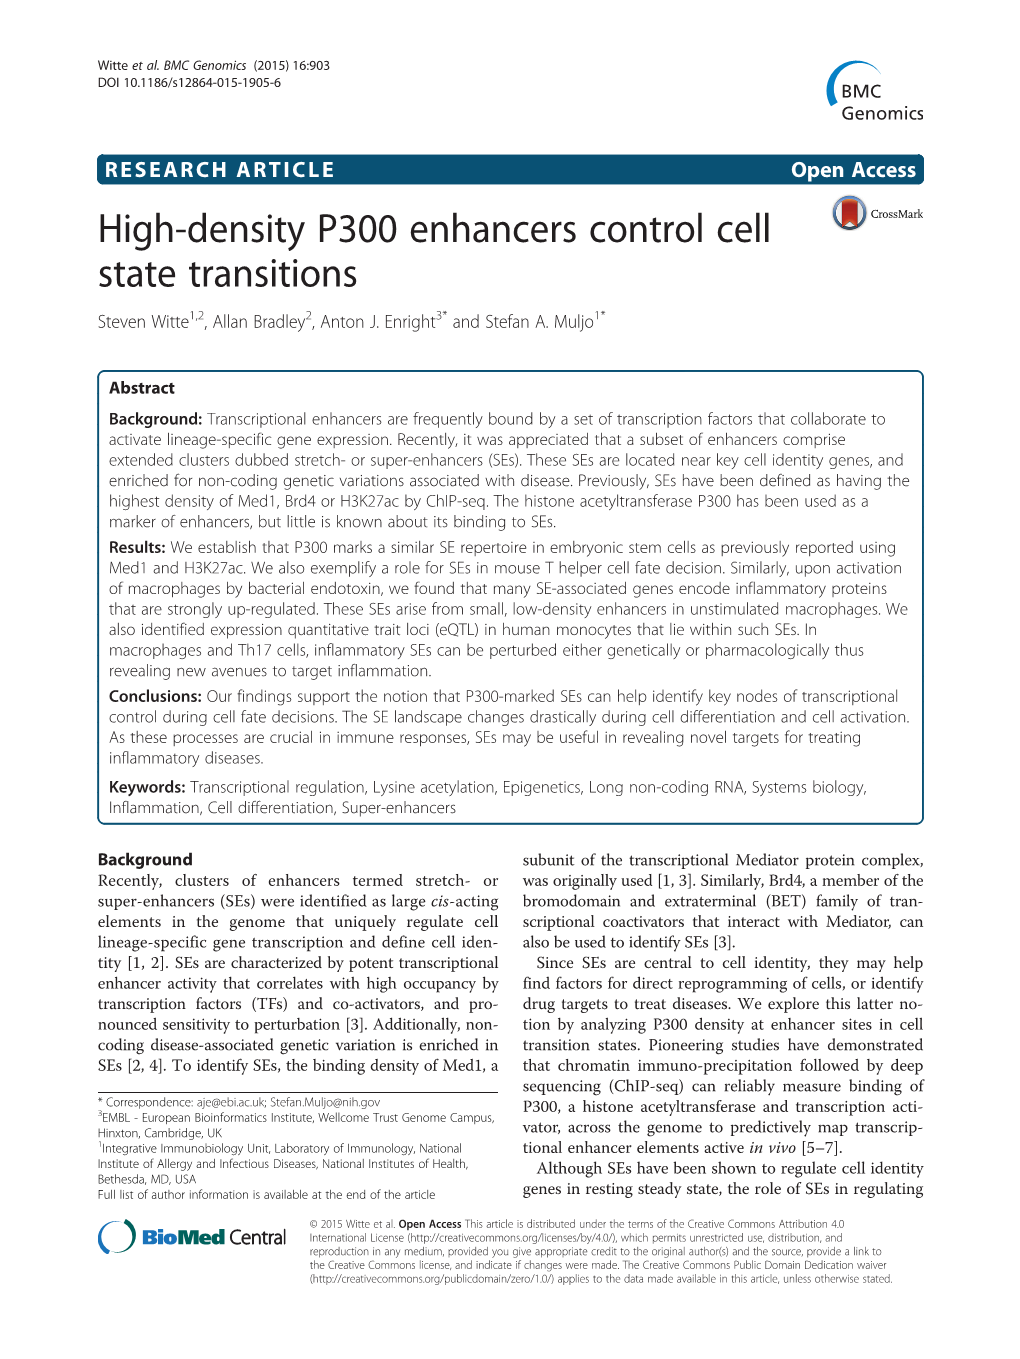 High-Density P300 Enhancers Control Cell State Transitions Steven Witte1,2, Allan Bradley2, Anton J